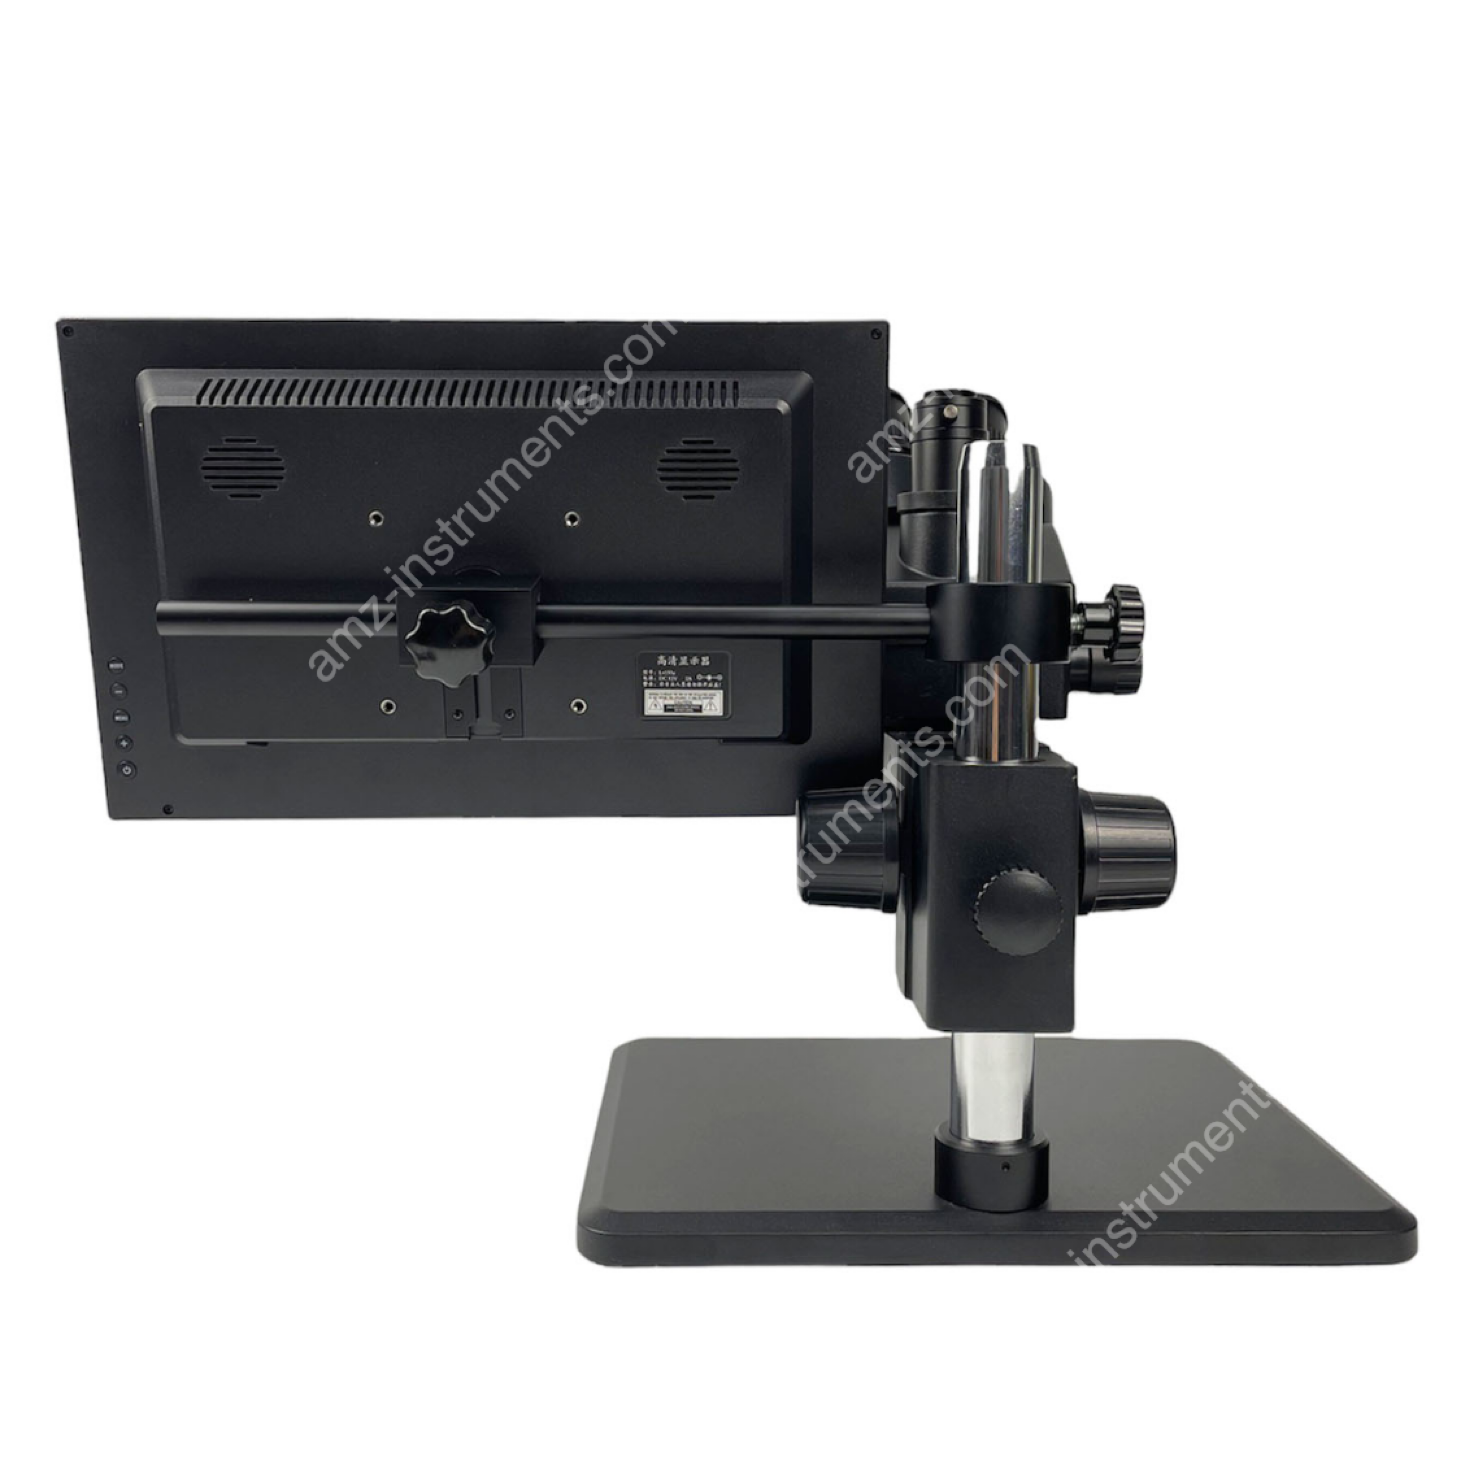 ZM0745T-B3L156 0.7X - 4.5X Zoom Trinocular Digital Stereo Microscope with 15.6 Inch LCD Screen